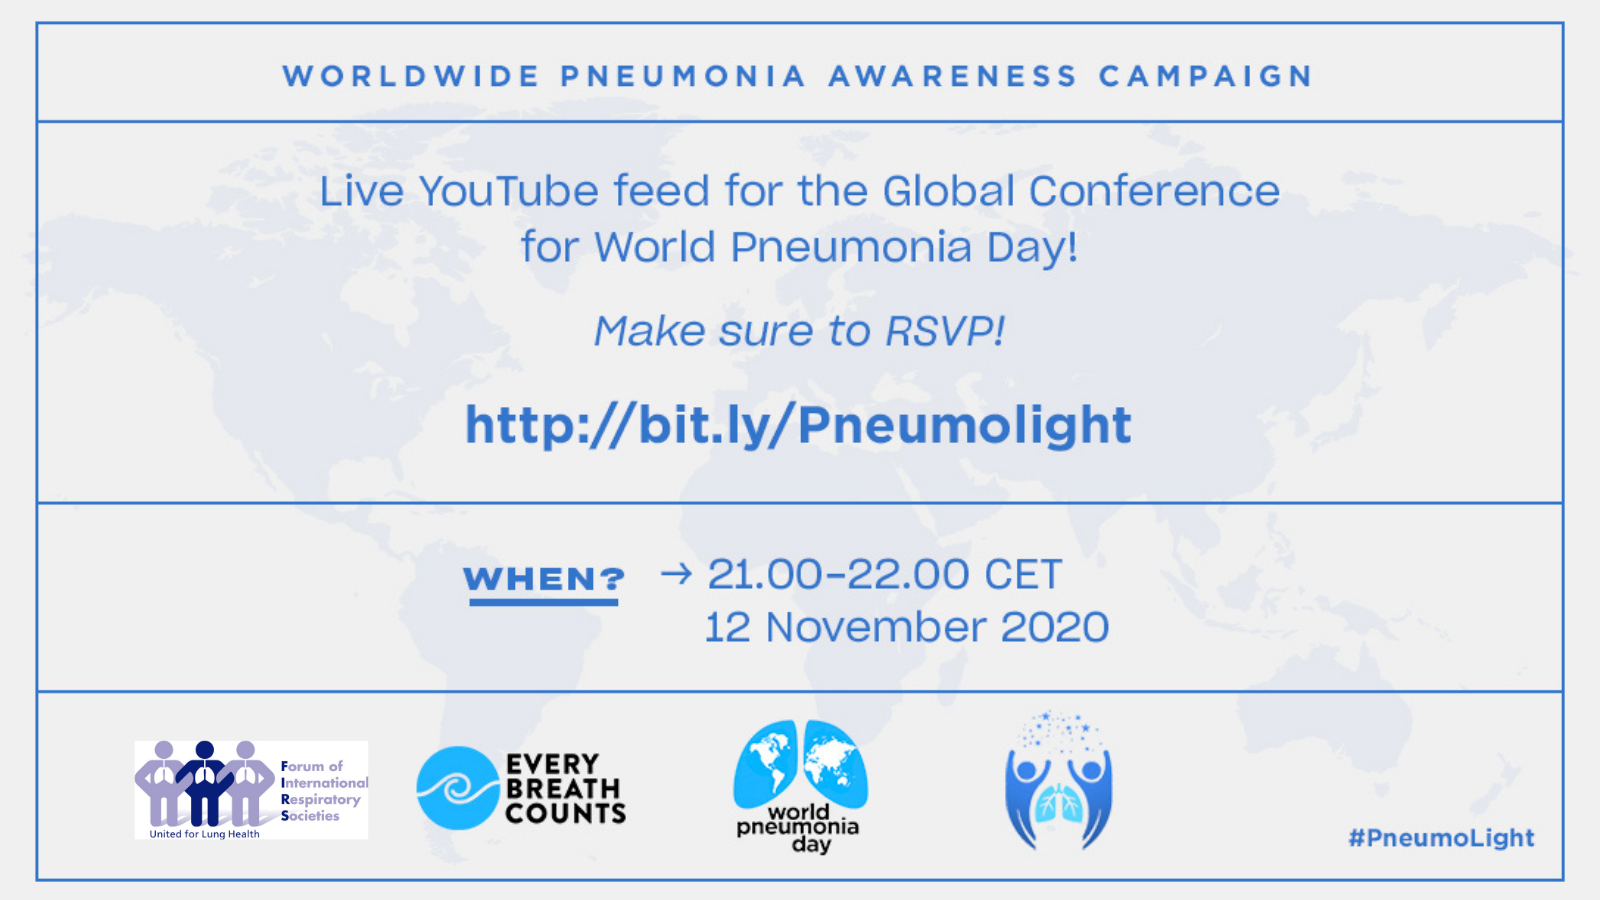 World Pneumonia Day 2020